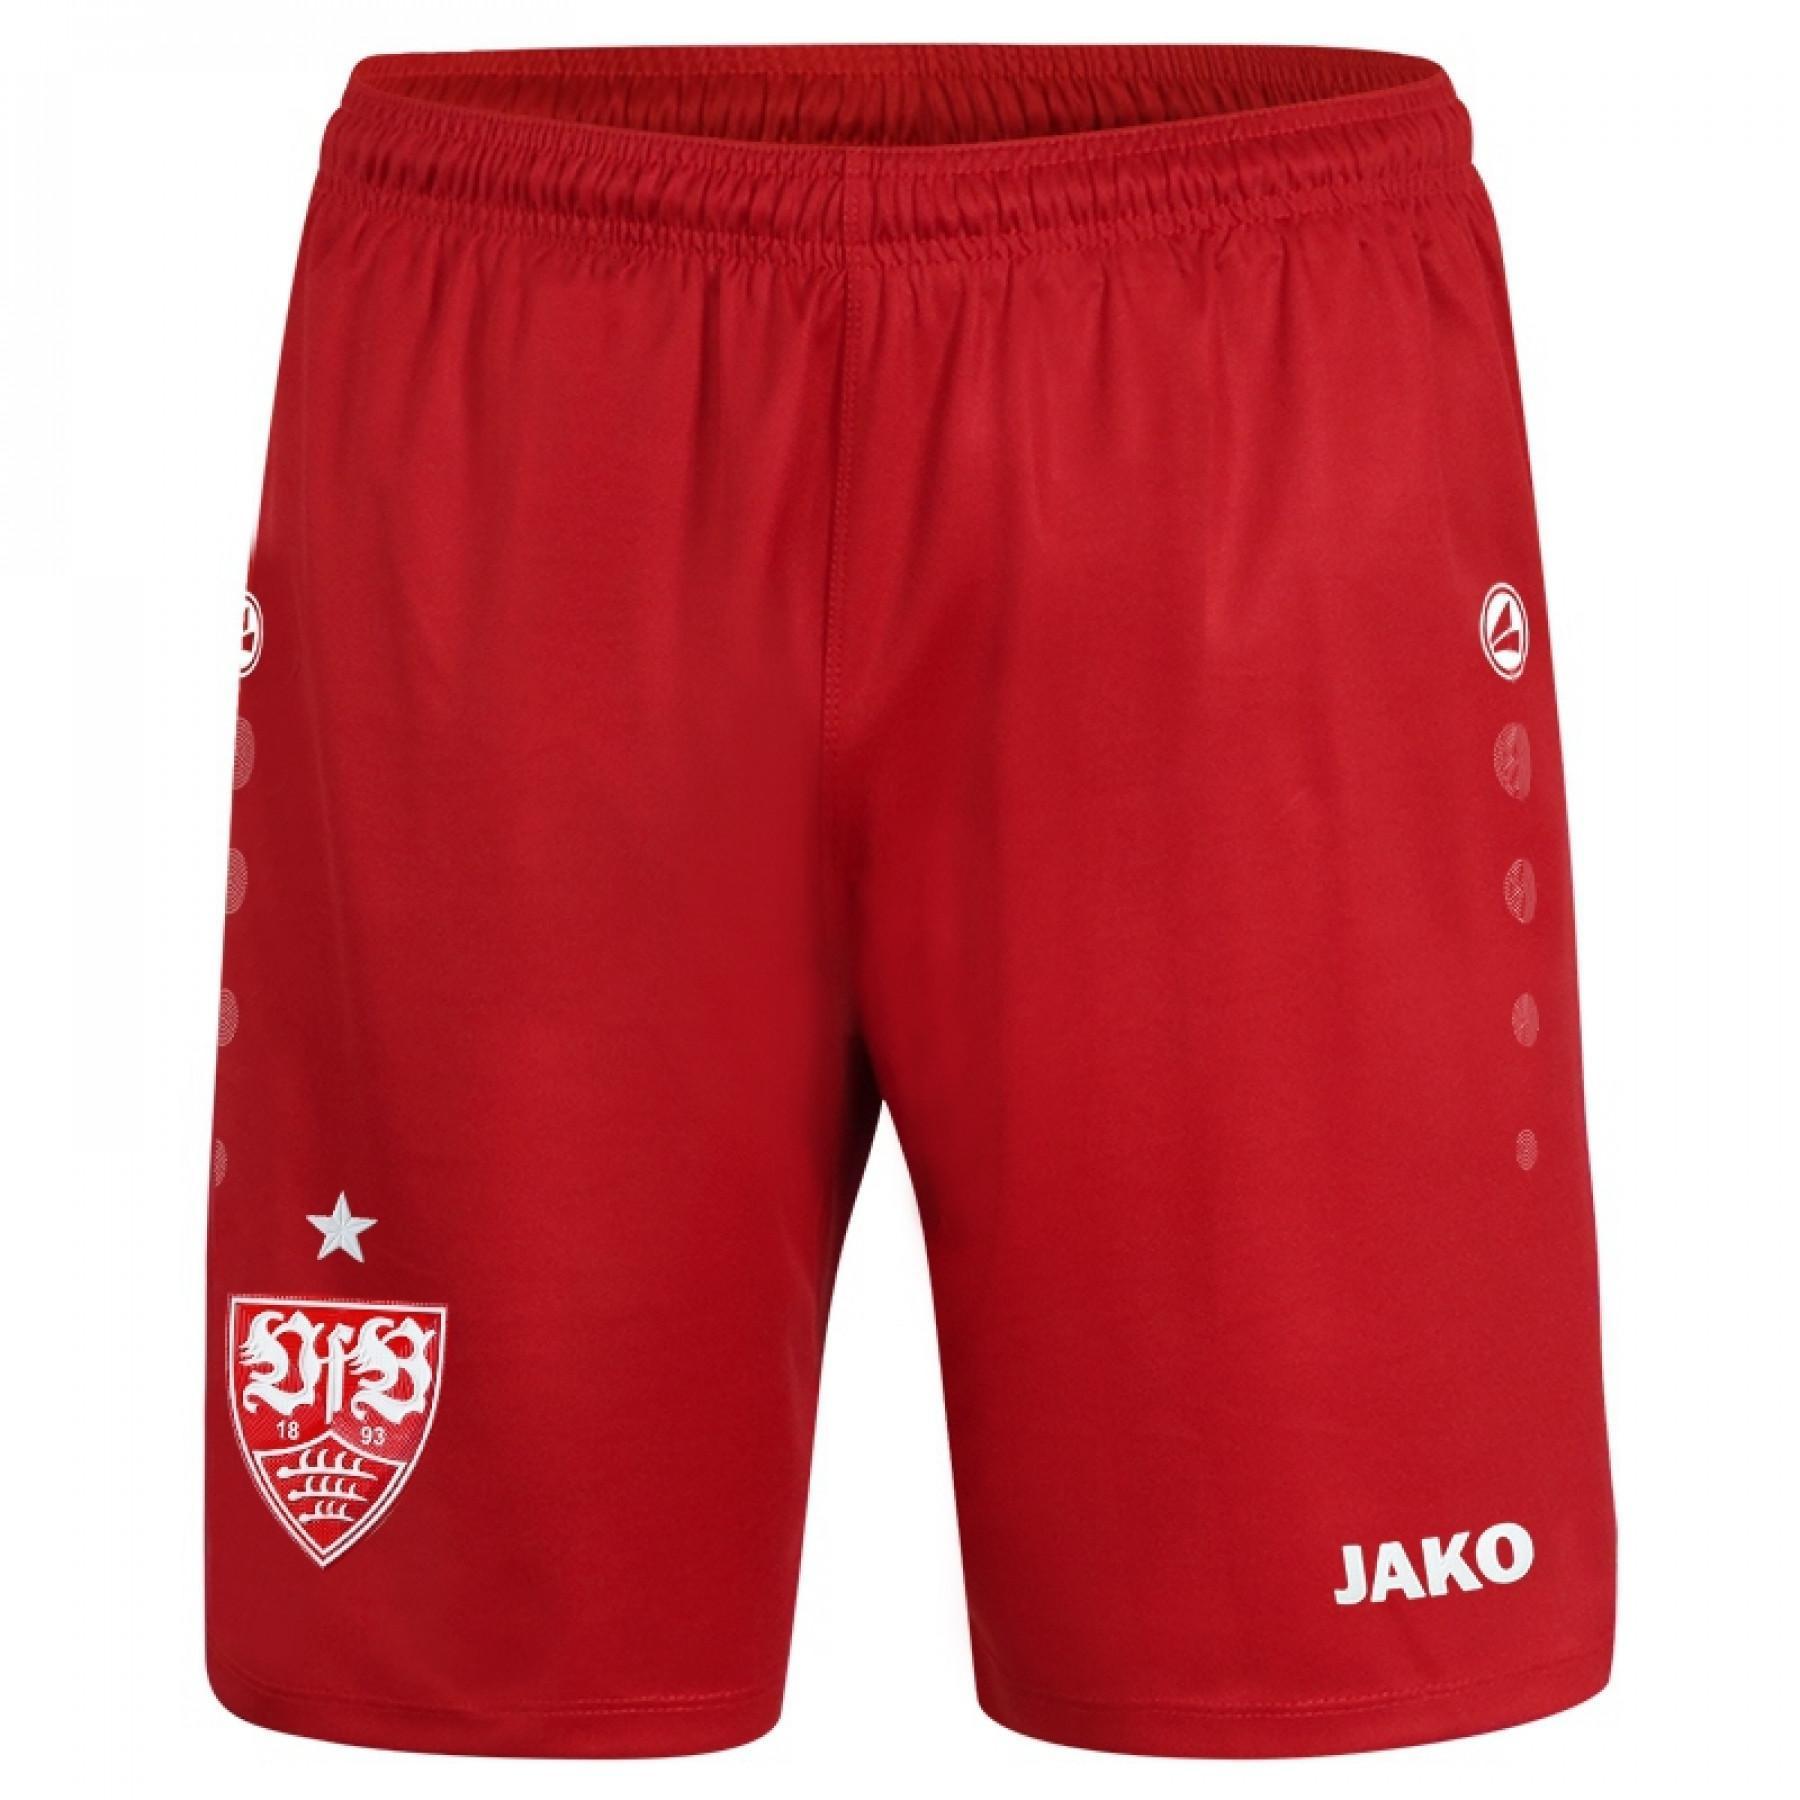 Children's outdoor shorts VfB Stuttgart 2019/20